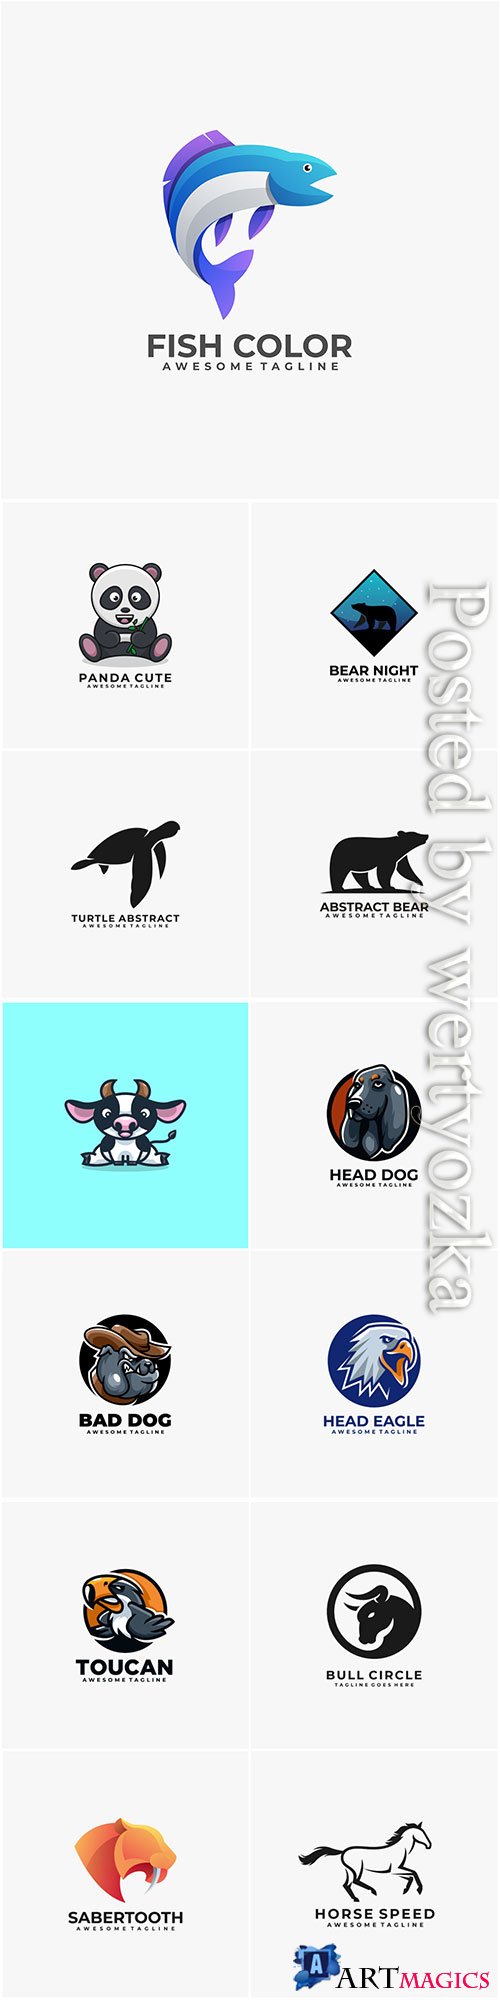 Animals and birds logos in vector